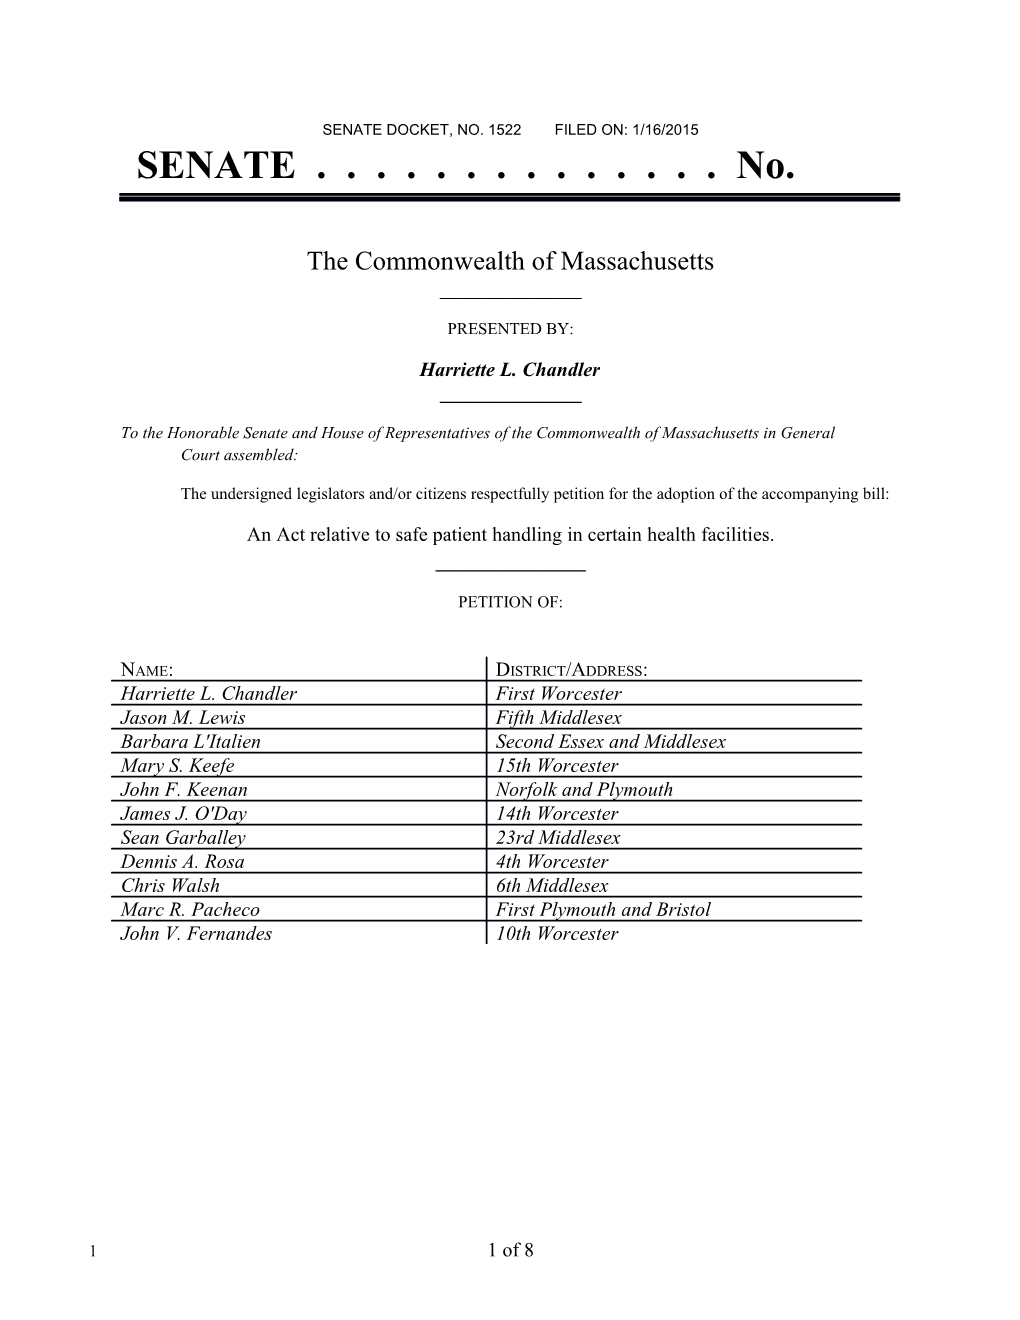 Senate Docket, No. 1522 Filed On: 1/16/2015